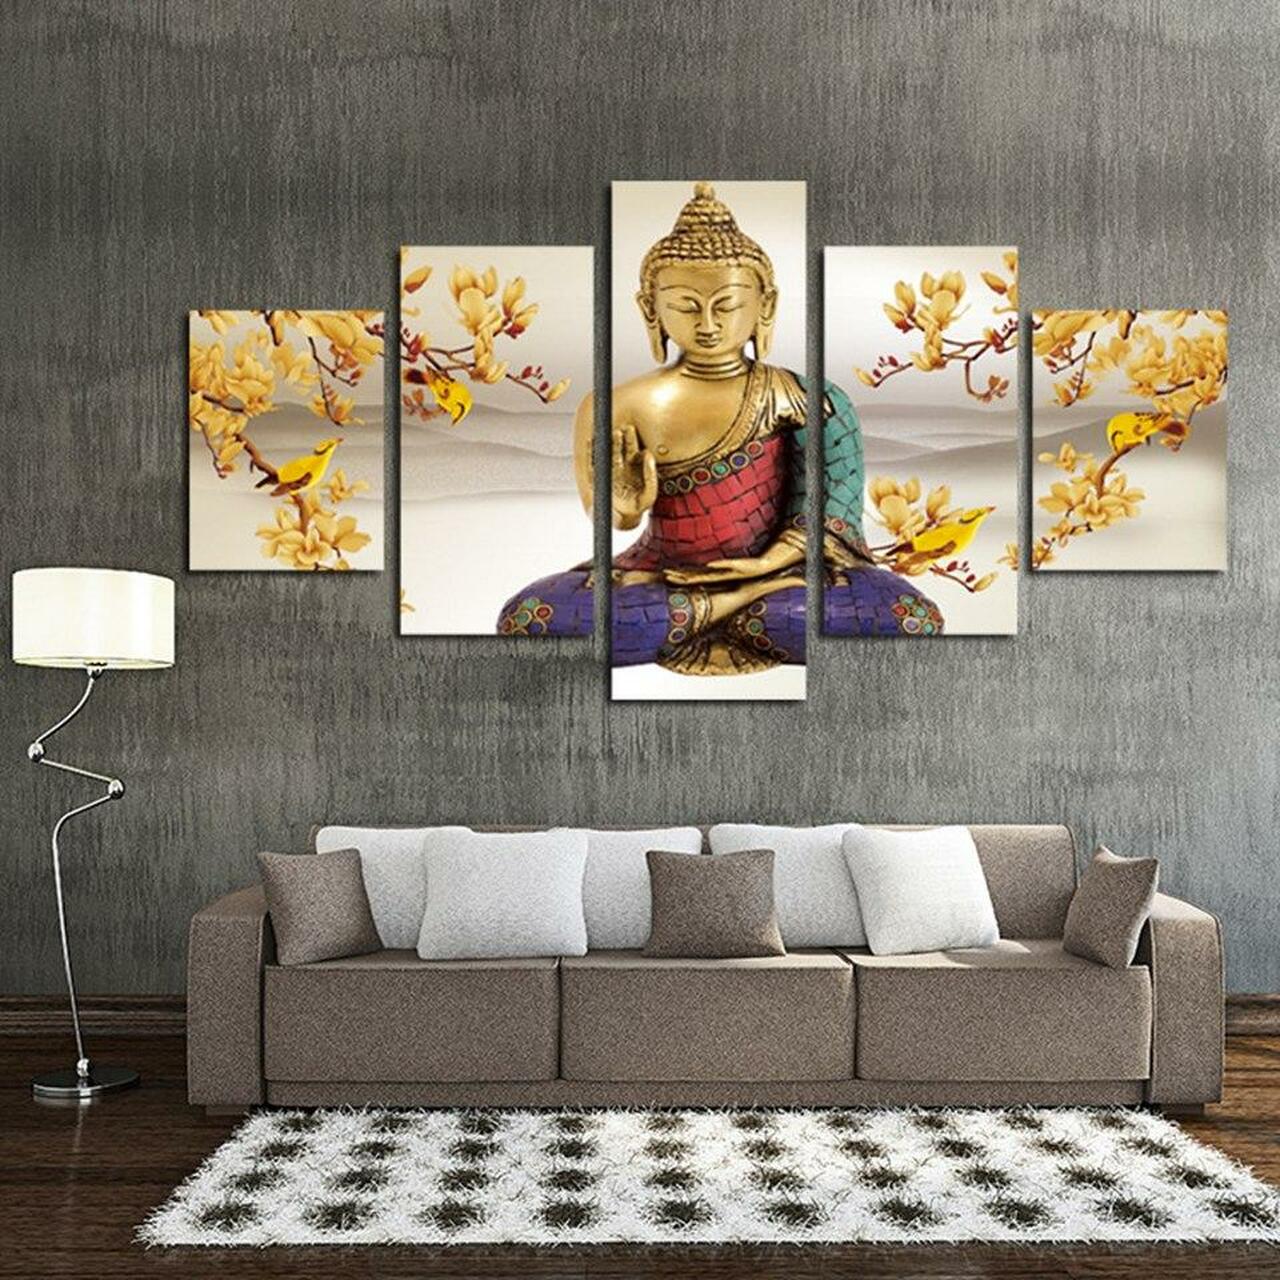 buddha and yellow bird 5 pices peinture sur toile impression sur toile toile art pour la dcoration intrieureyvlgf